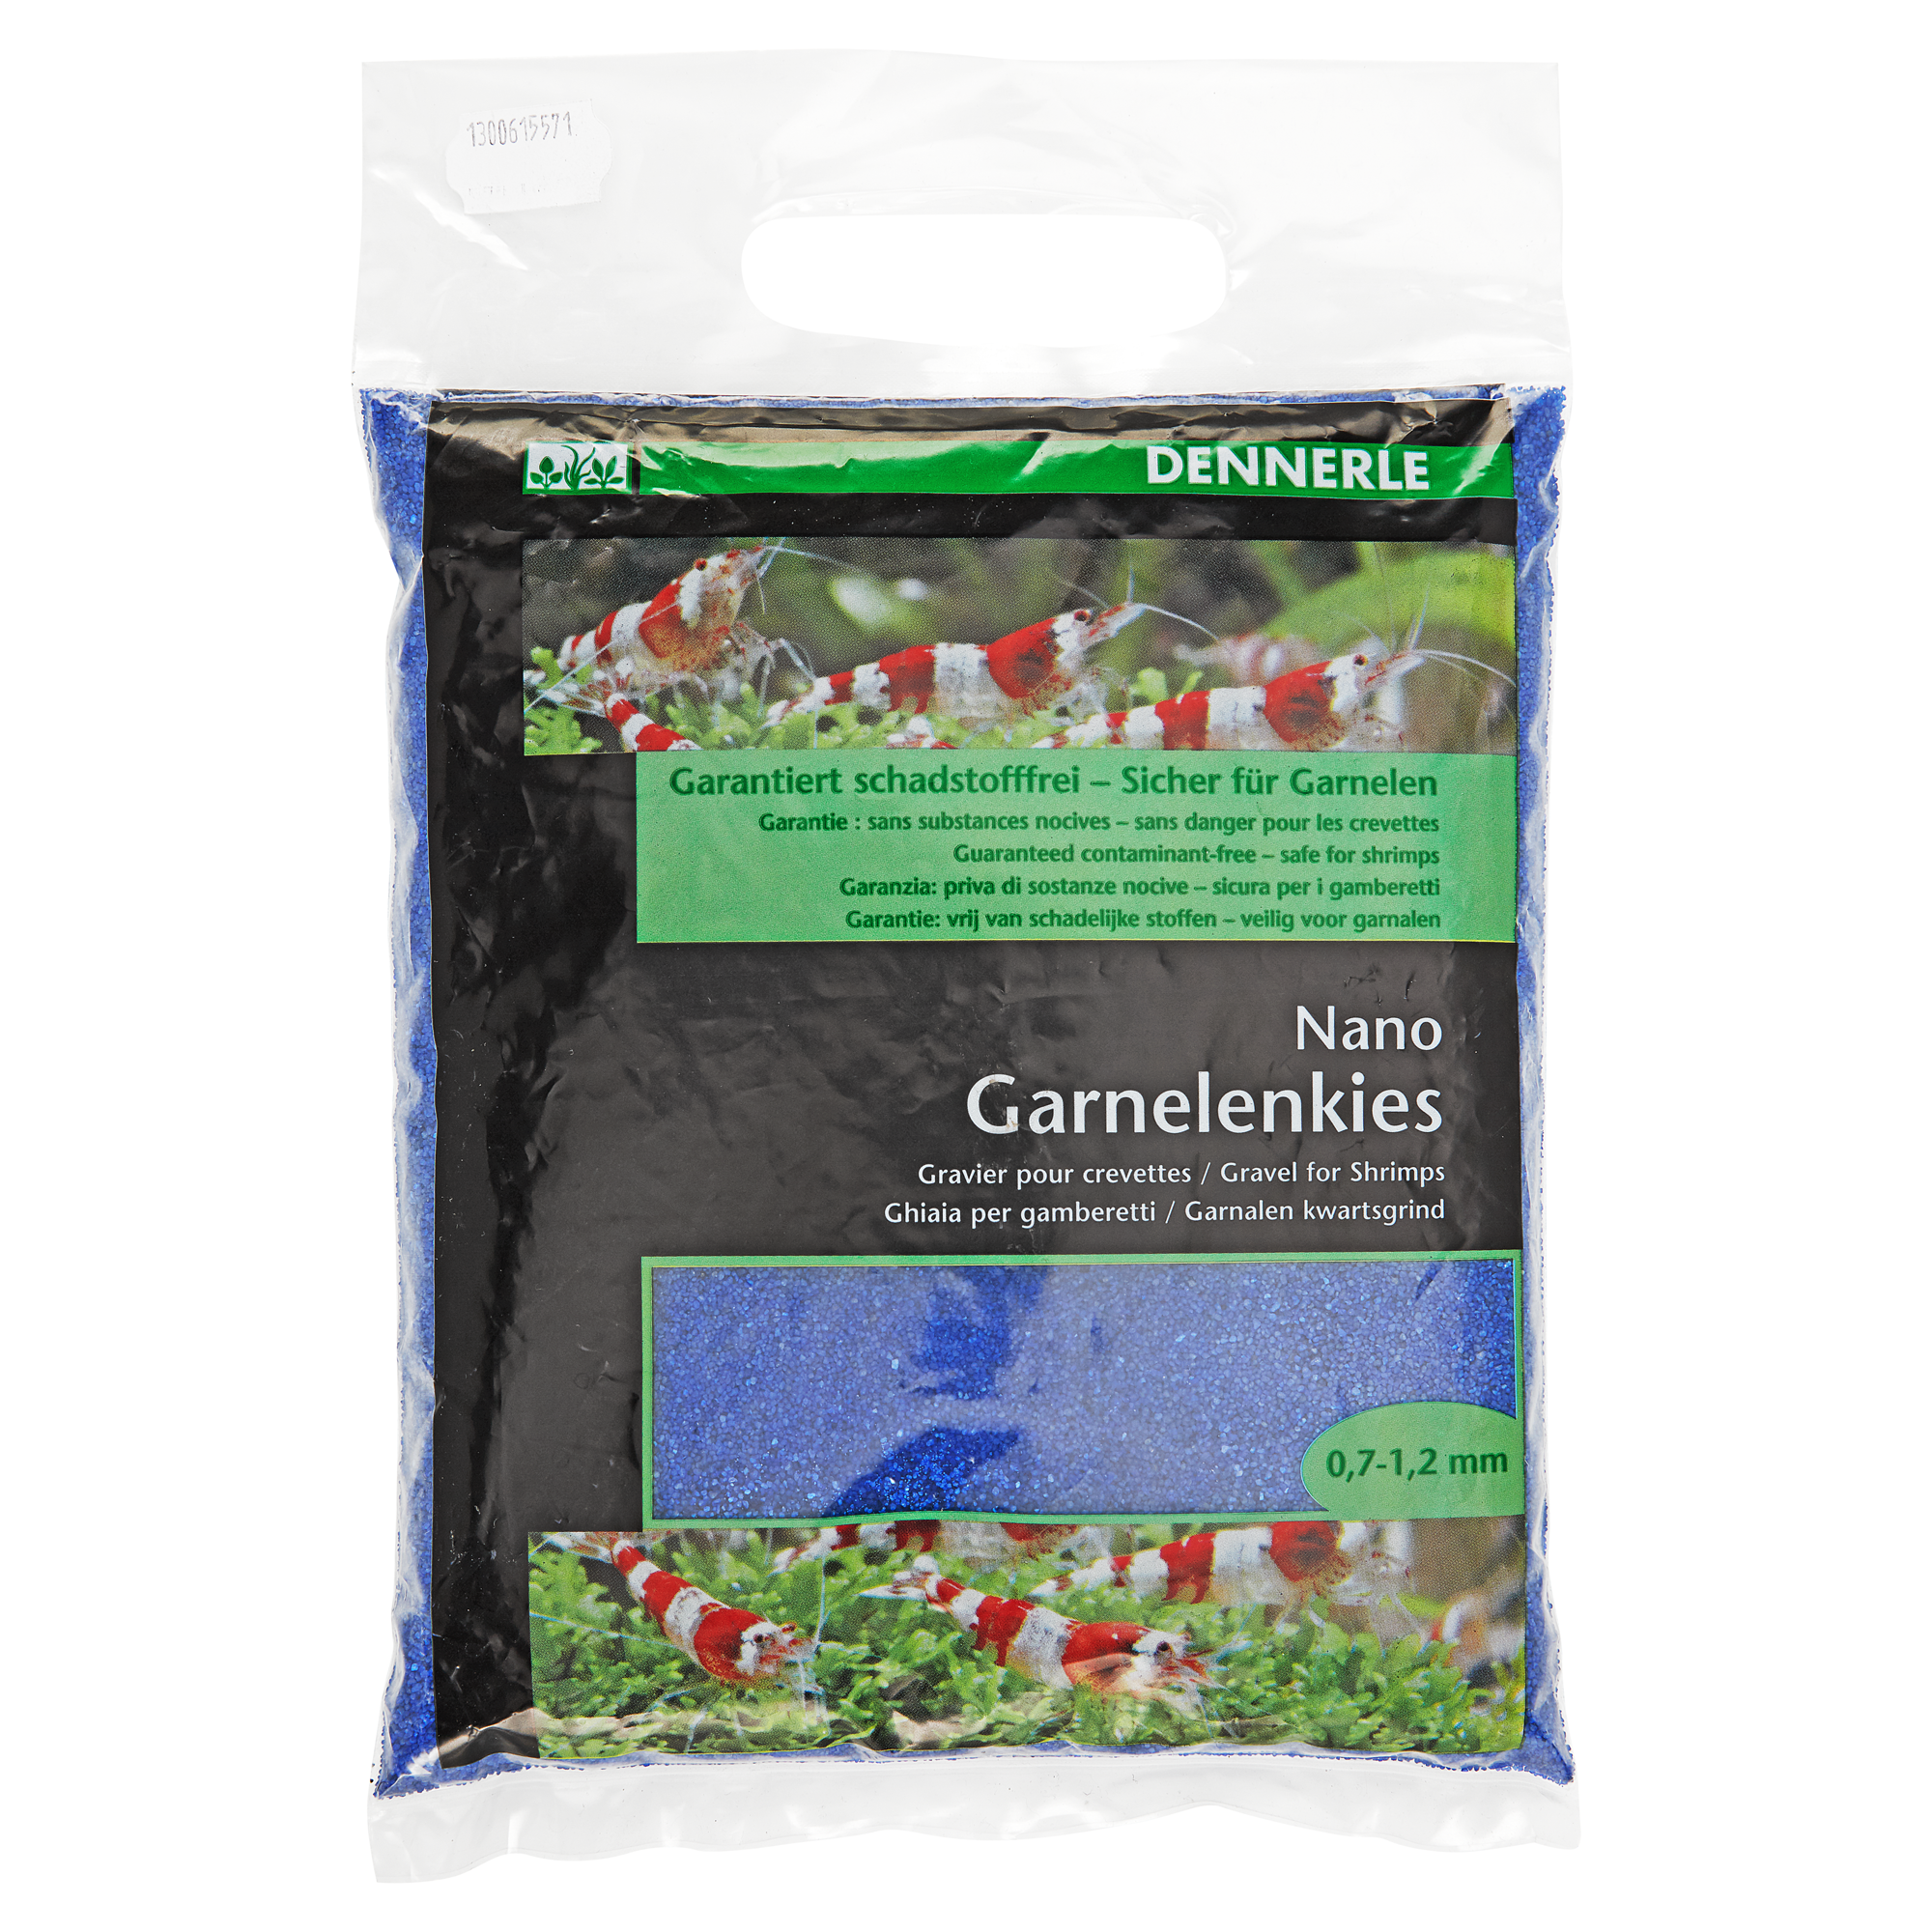 Nano-Garnelenkies 2 kg azurblau + product picture